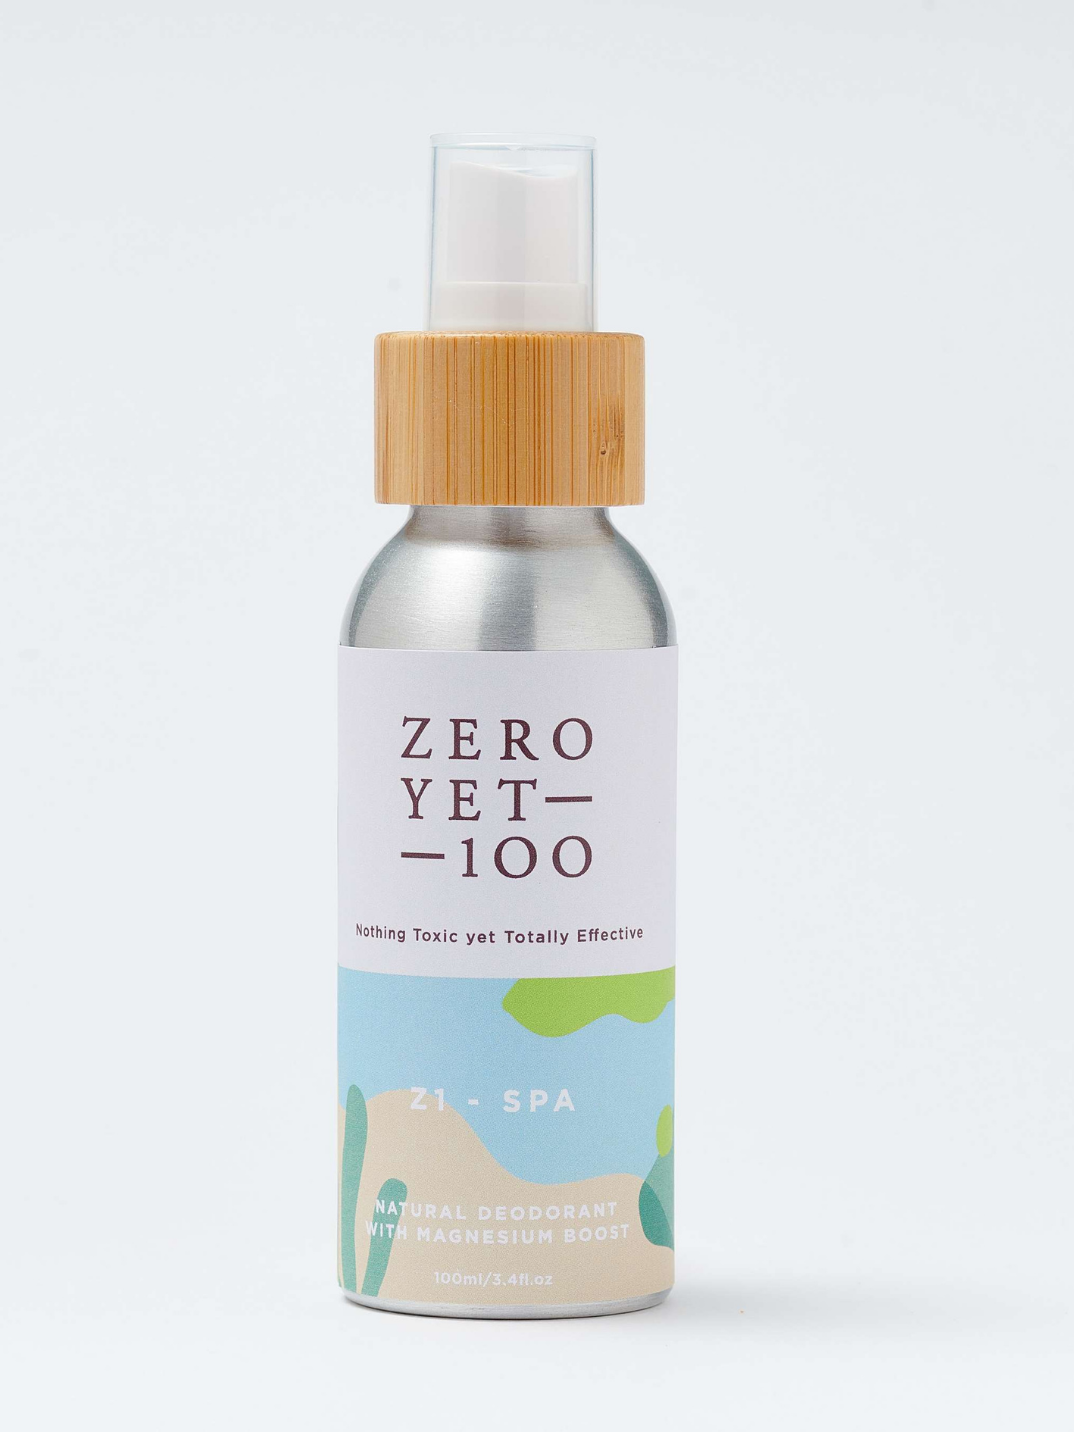 Z1 Spa Deodorant Spray Zero Yet 100 ethical skincare plastic-free packaging